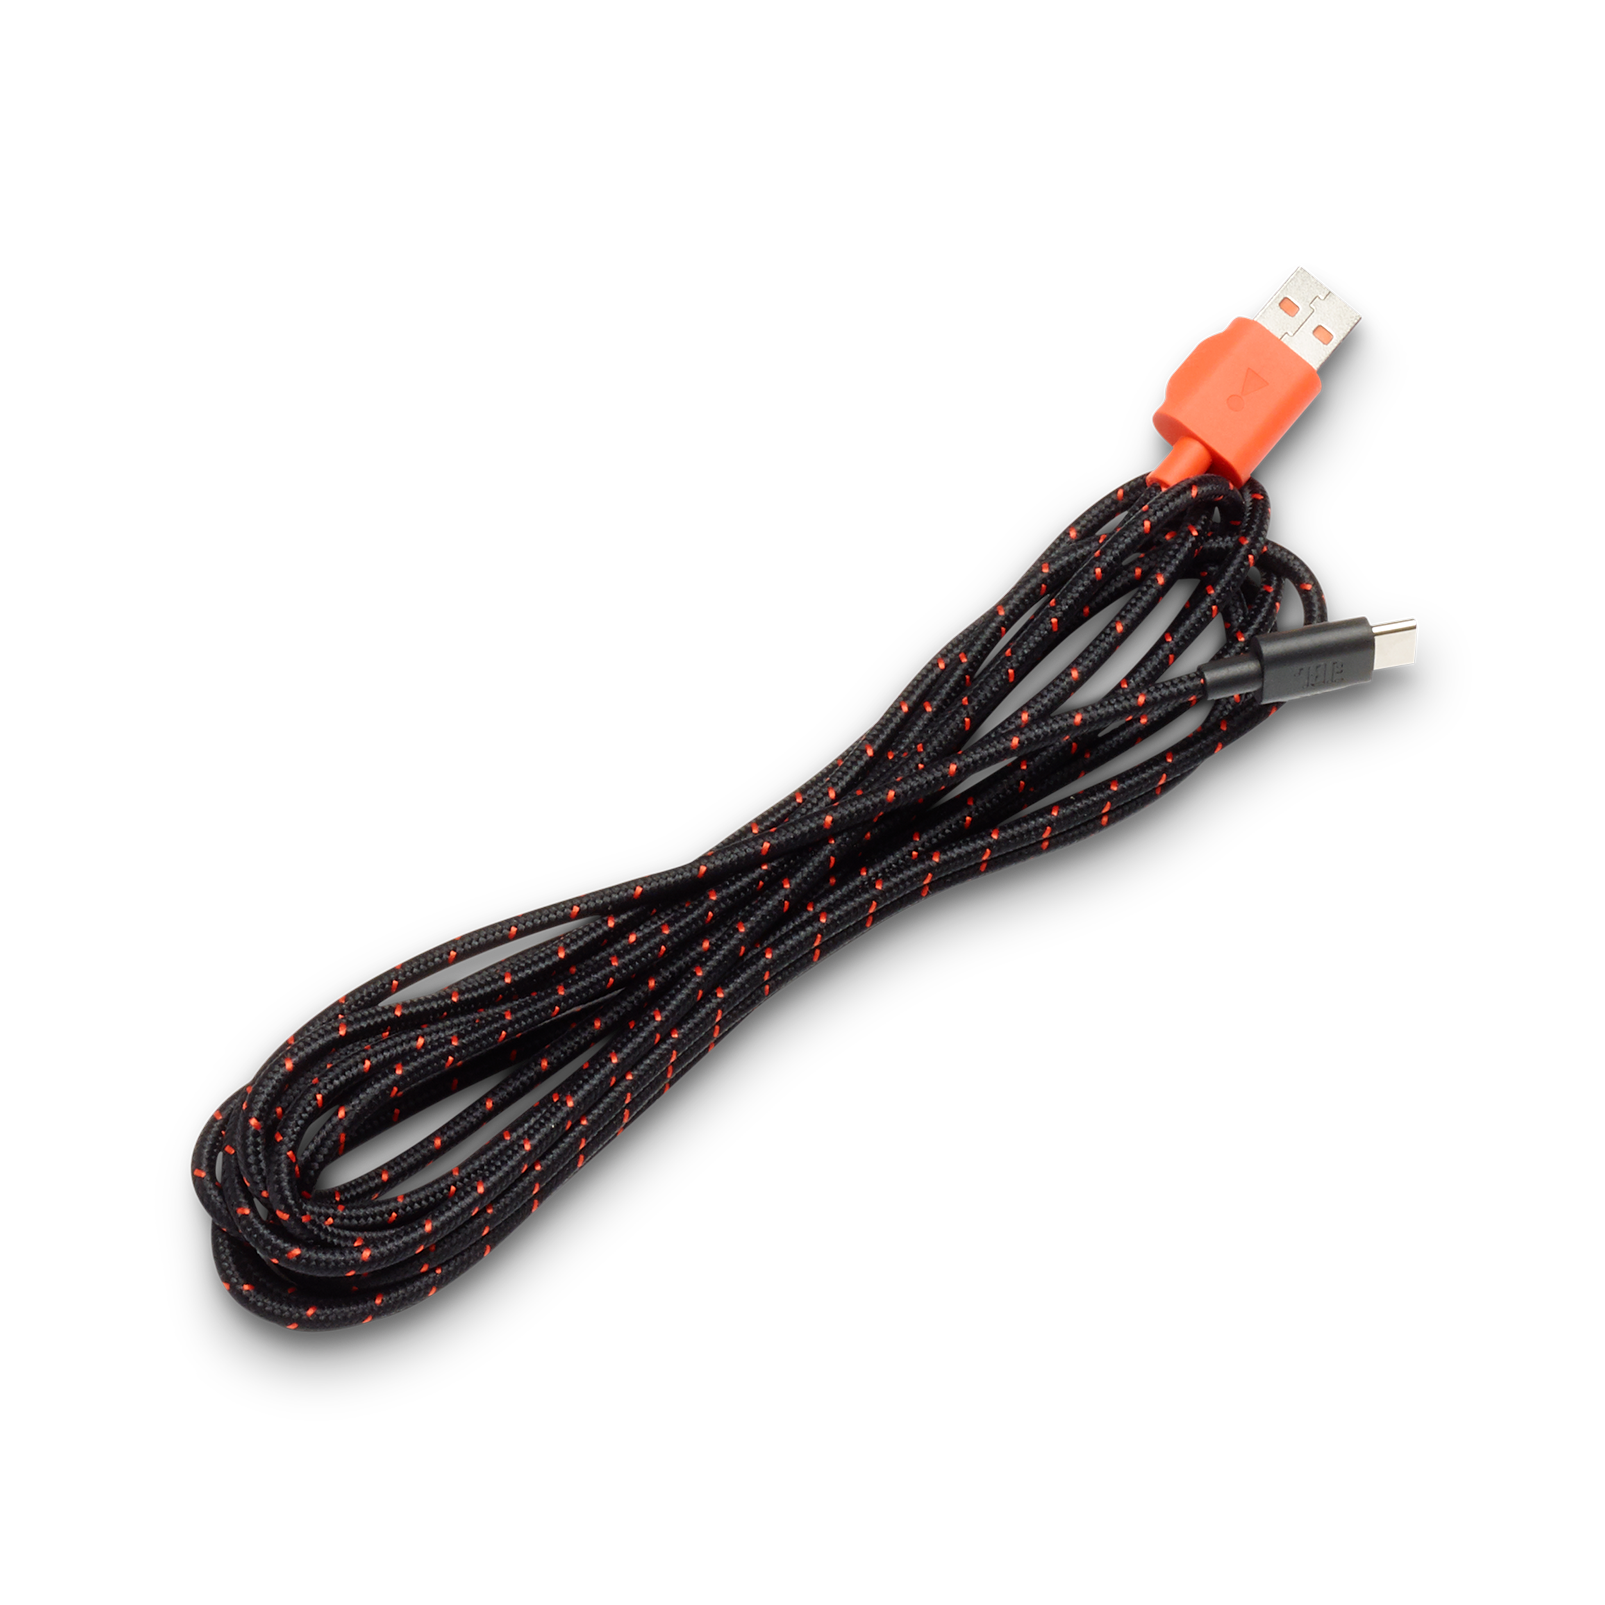 JBL USB cable for Quantum 400 - Black - USB cable 2.0A, 300cm - Hero